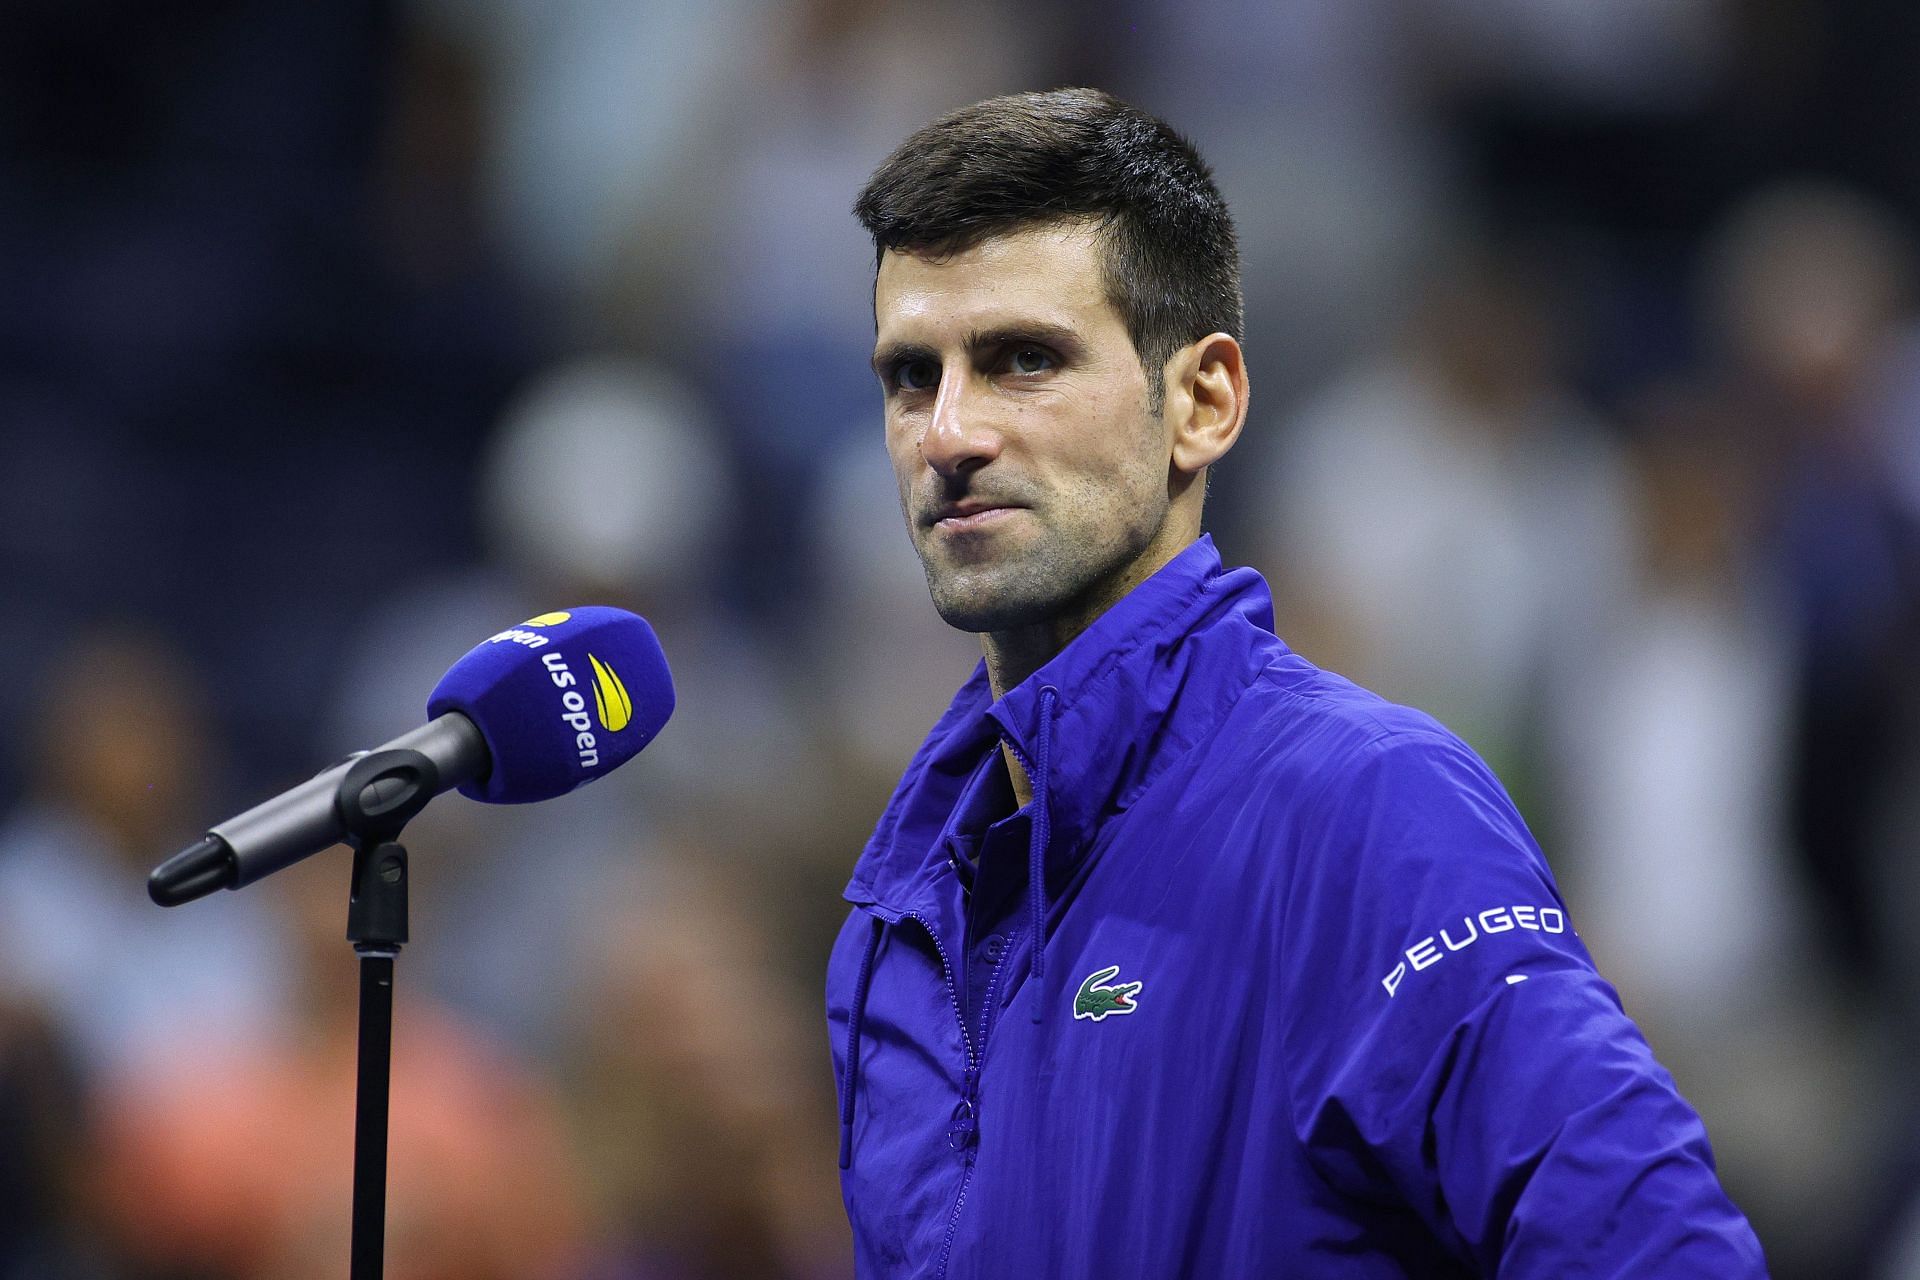 Novak Djokovic was the 2021 US Open finalist.